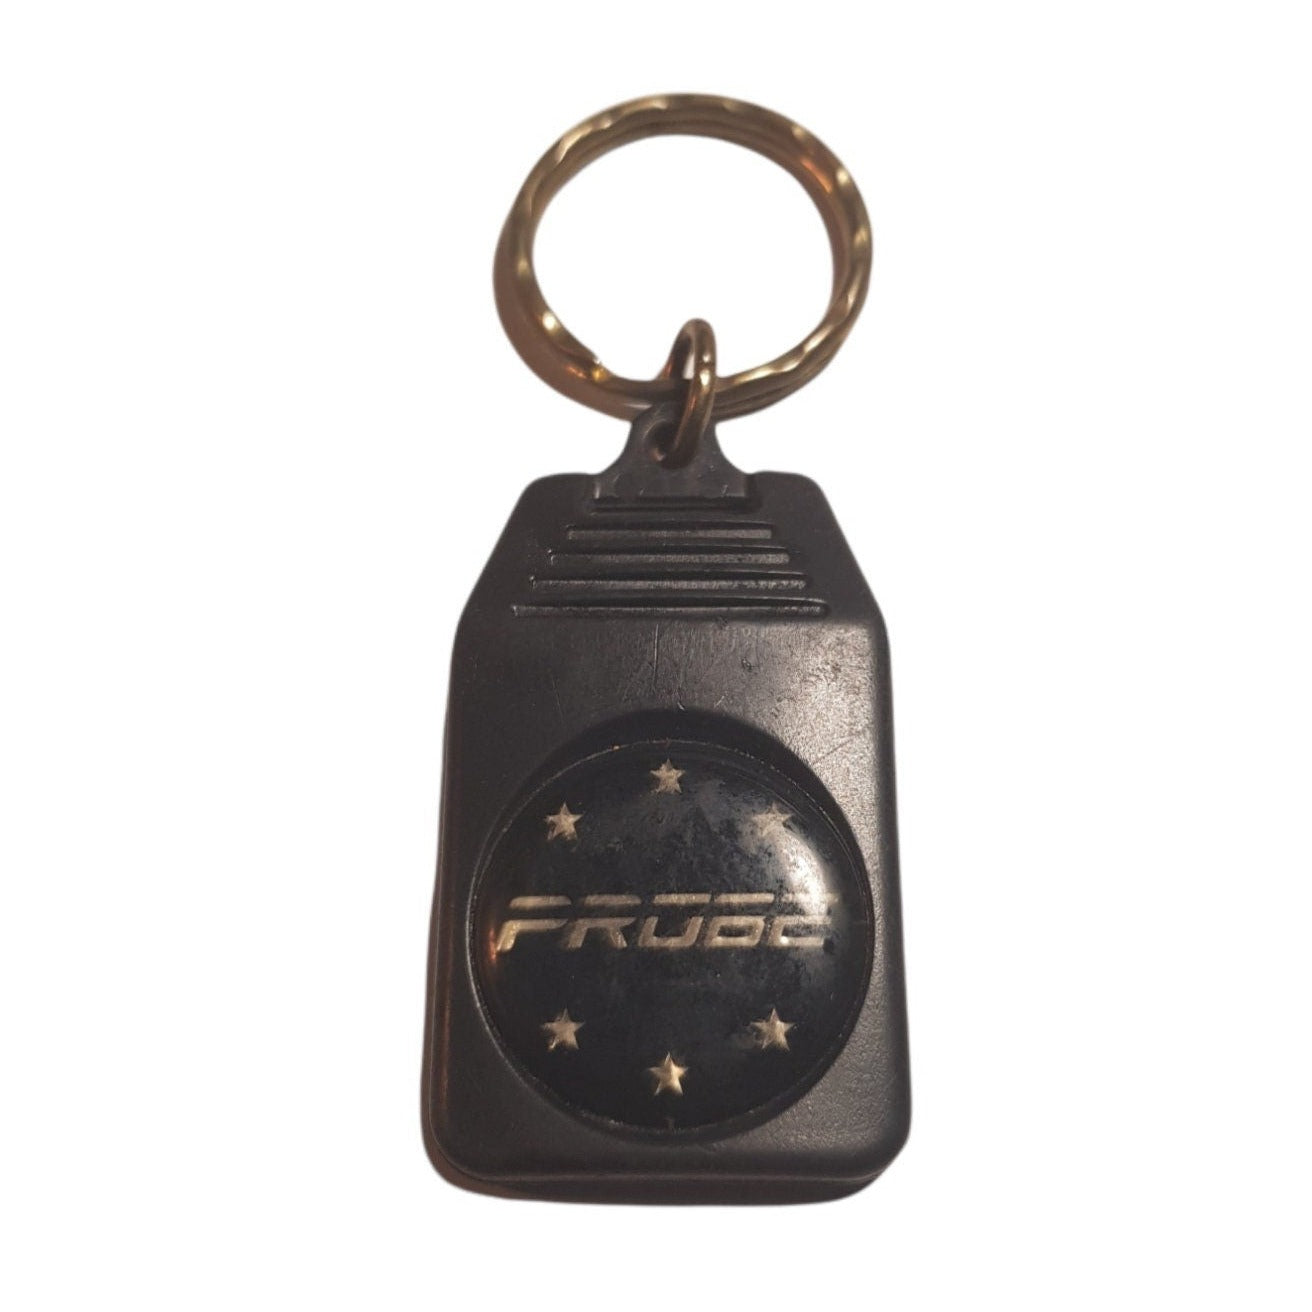 ford probe  key chain keychain key fob keytag vintage automotove keychain gift collectible